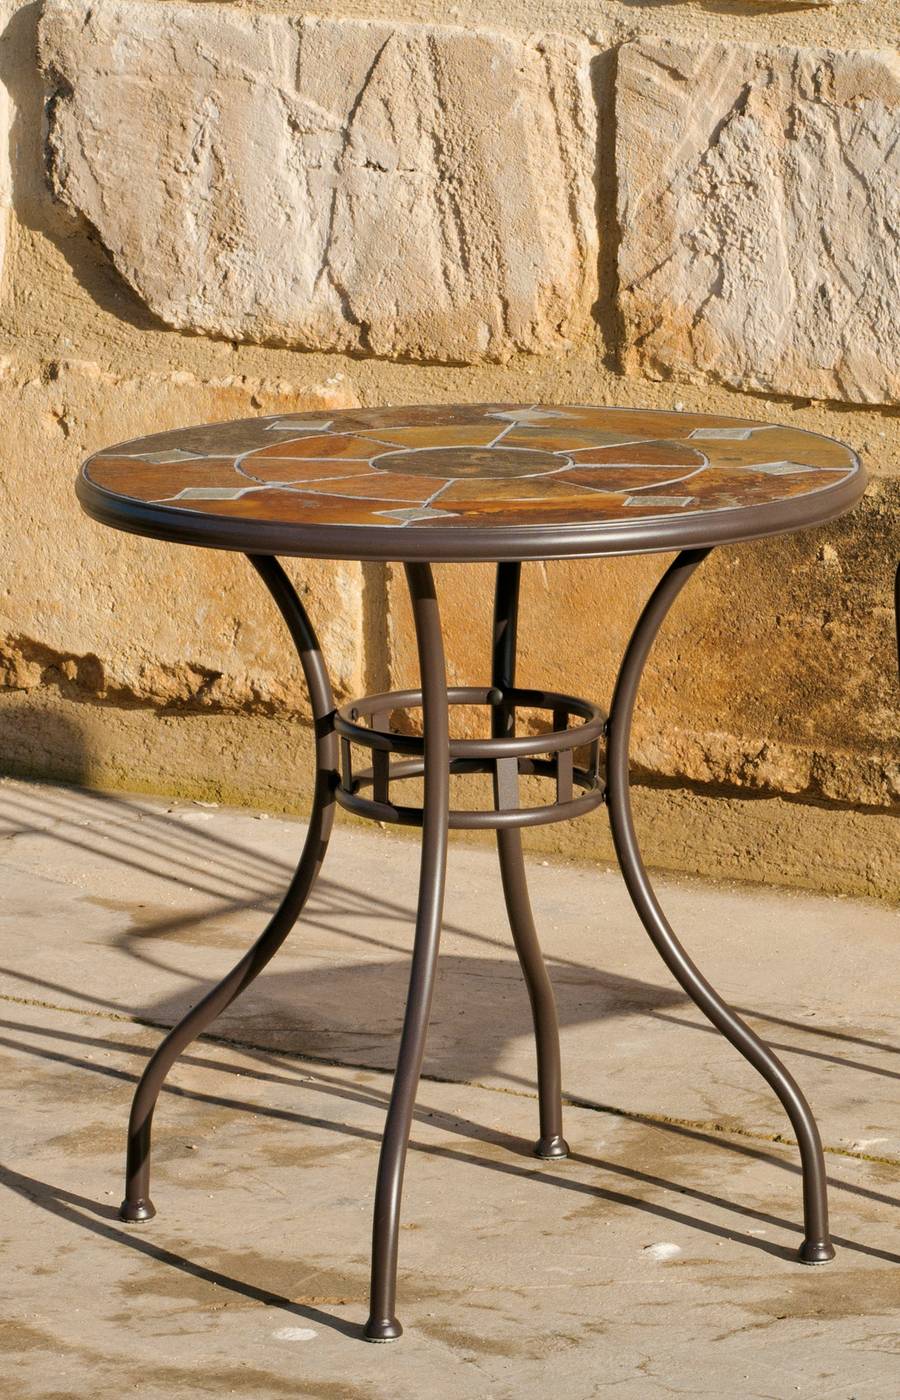 Set Mosaico Luxe Adria-Cancun 70-4 - Conjunto de forja de lujo: mesa con panel mosaico 70 cm + 4 sillones de forja apilables